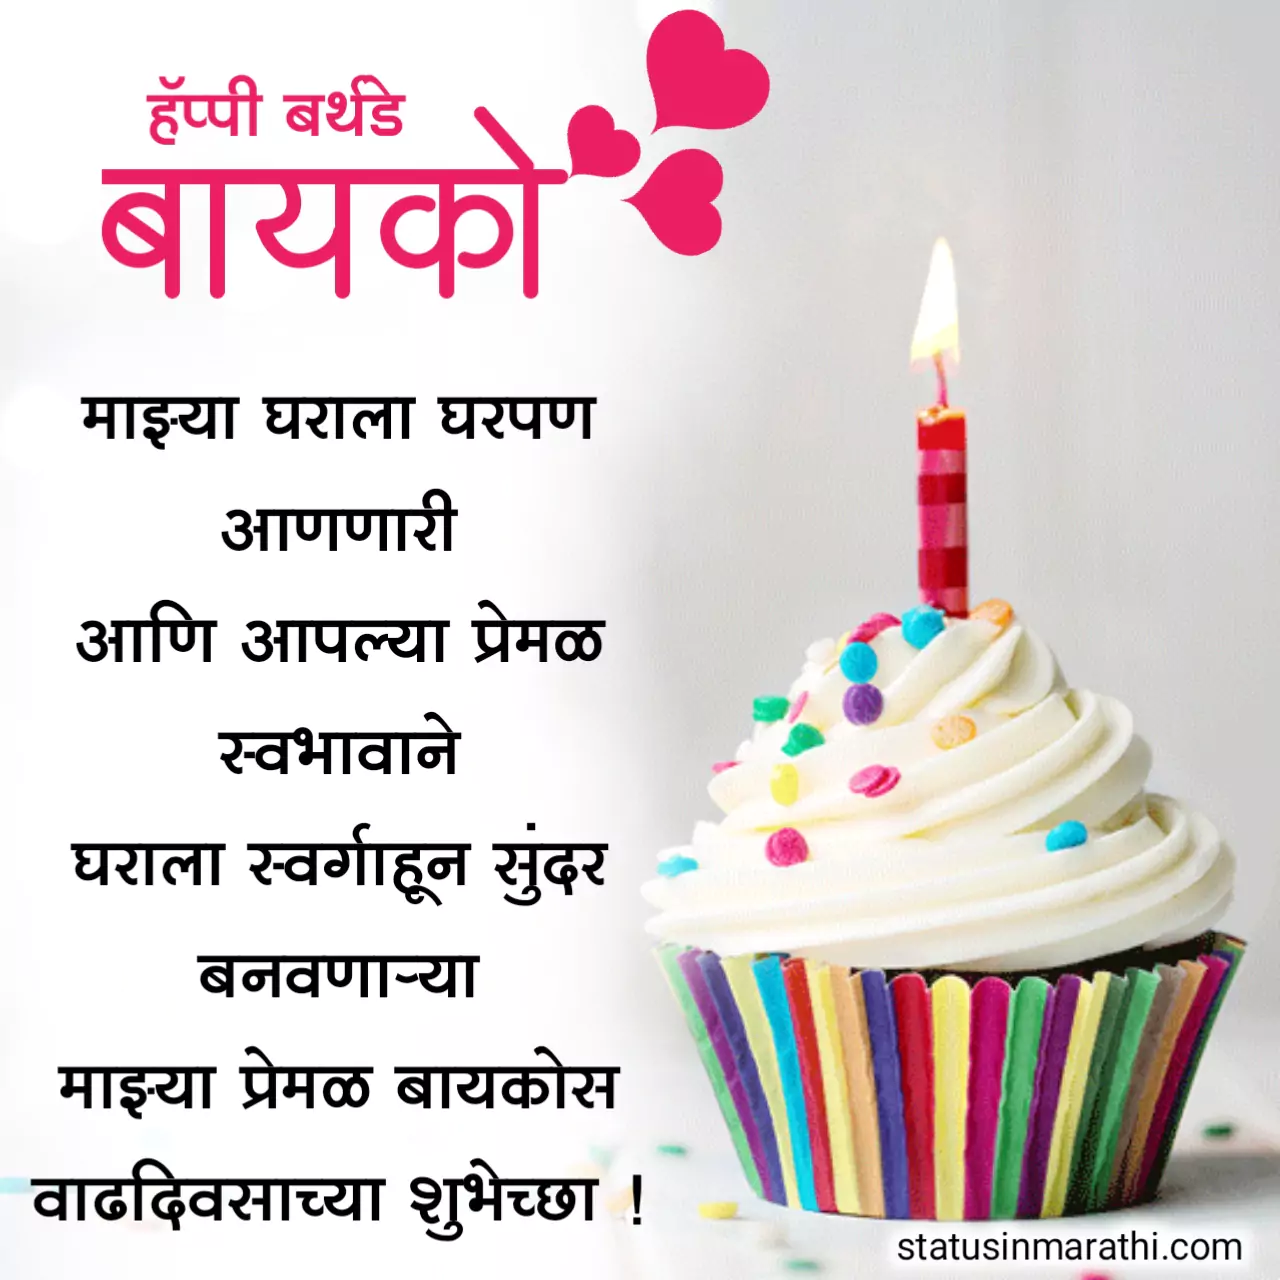 Happy Birthday Image for wife in marathi